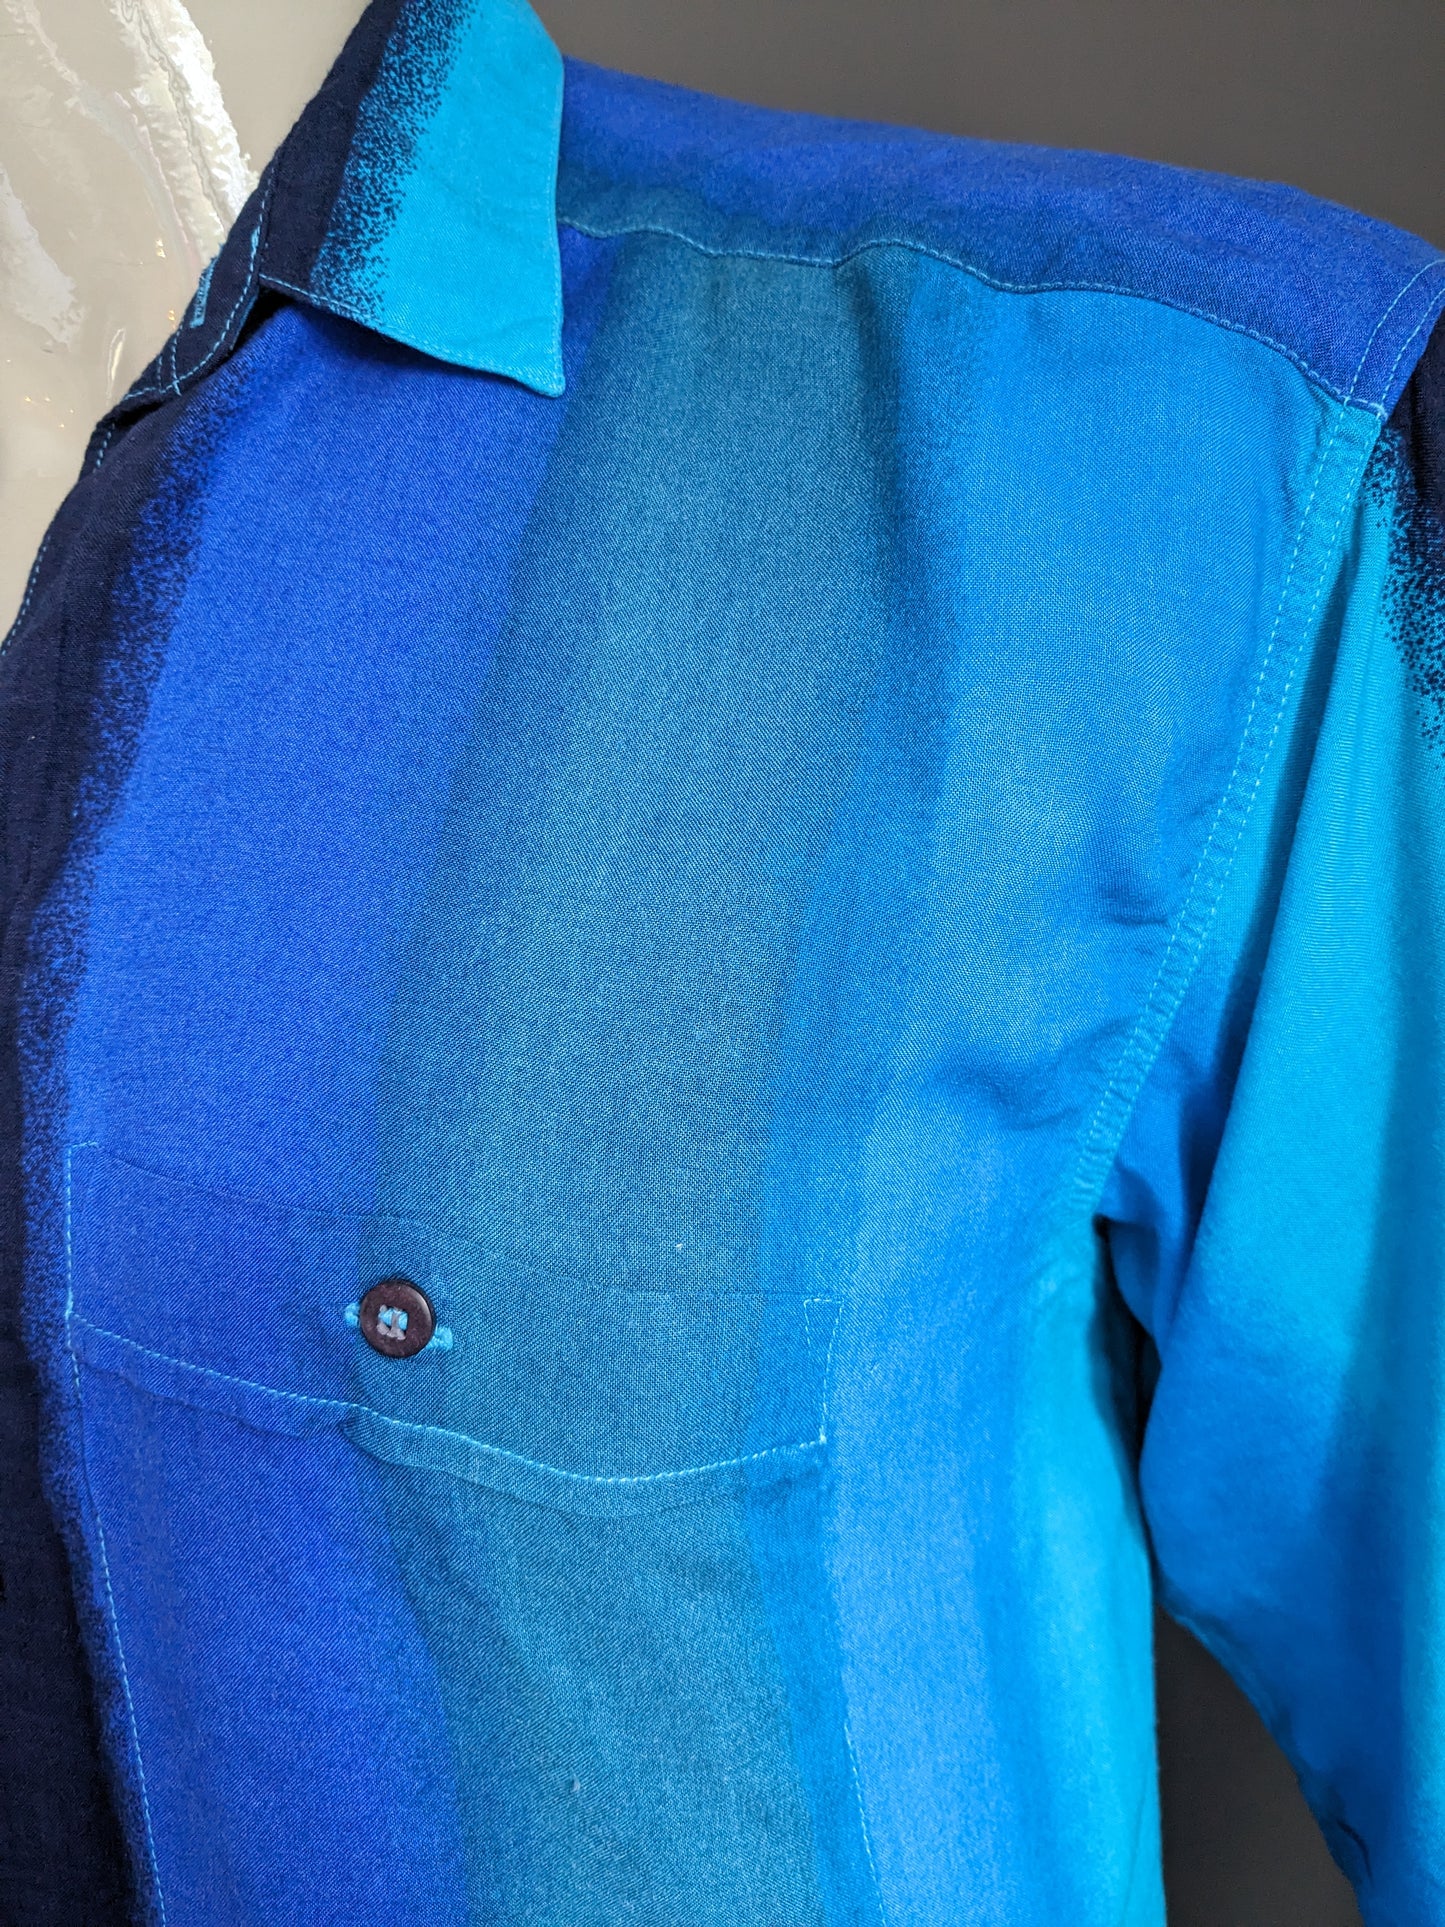 Vintage 80s-90's business style shirt short sleeve. Blue print. Size L.